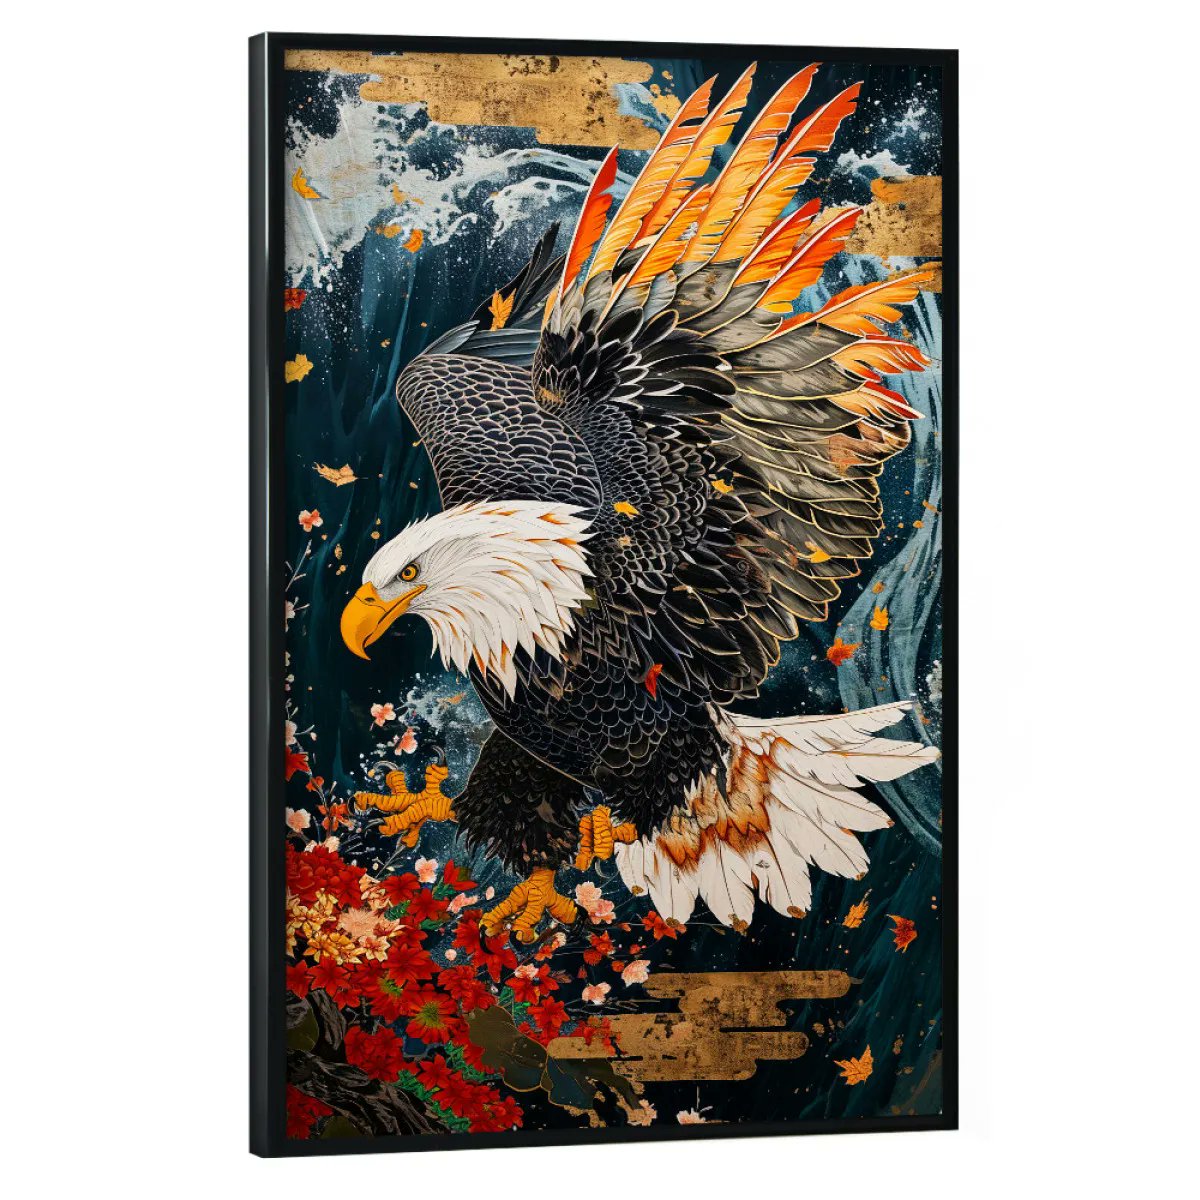 Eagle
artboxone.de/wandbilder/pos…

#eagle #birds #nature #mountains #forest #photoshop #home #homedecor #poster #room #art #artist #sale #artsale #ilustration #digitalart #orderart #commissionart #commissionopen #art #artist #fanart #artforsale